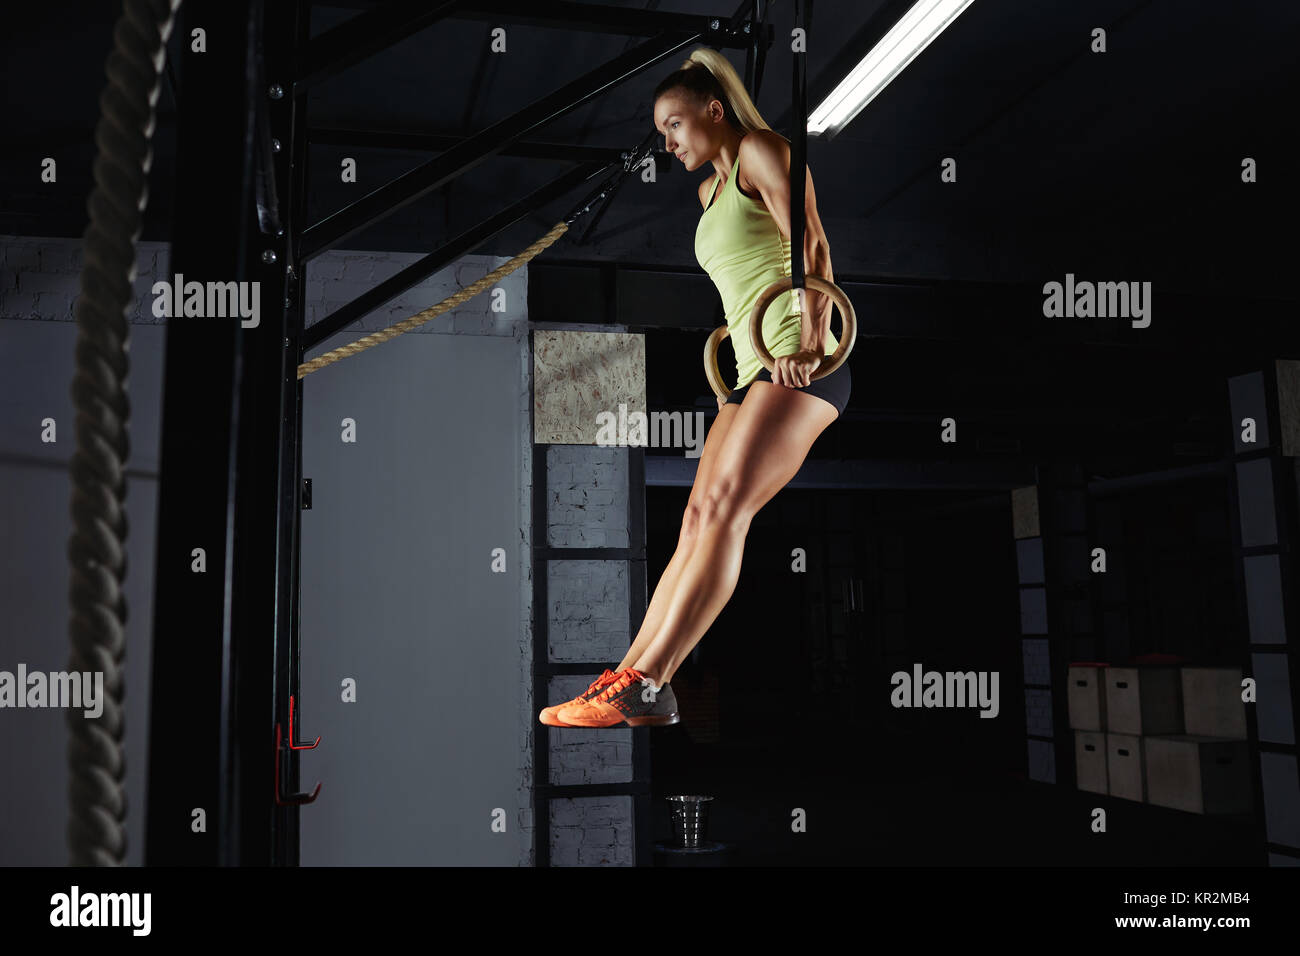 Beautiful Fit Crossfit Woman Exercising Stock Image - Image of gymnastic,  focused: 143932117